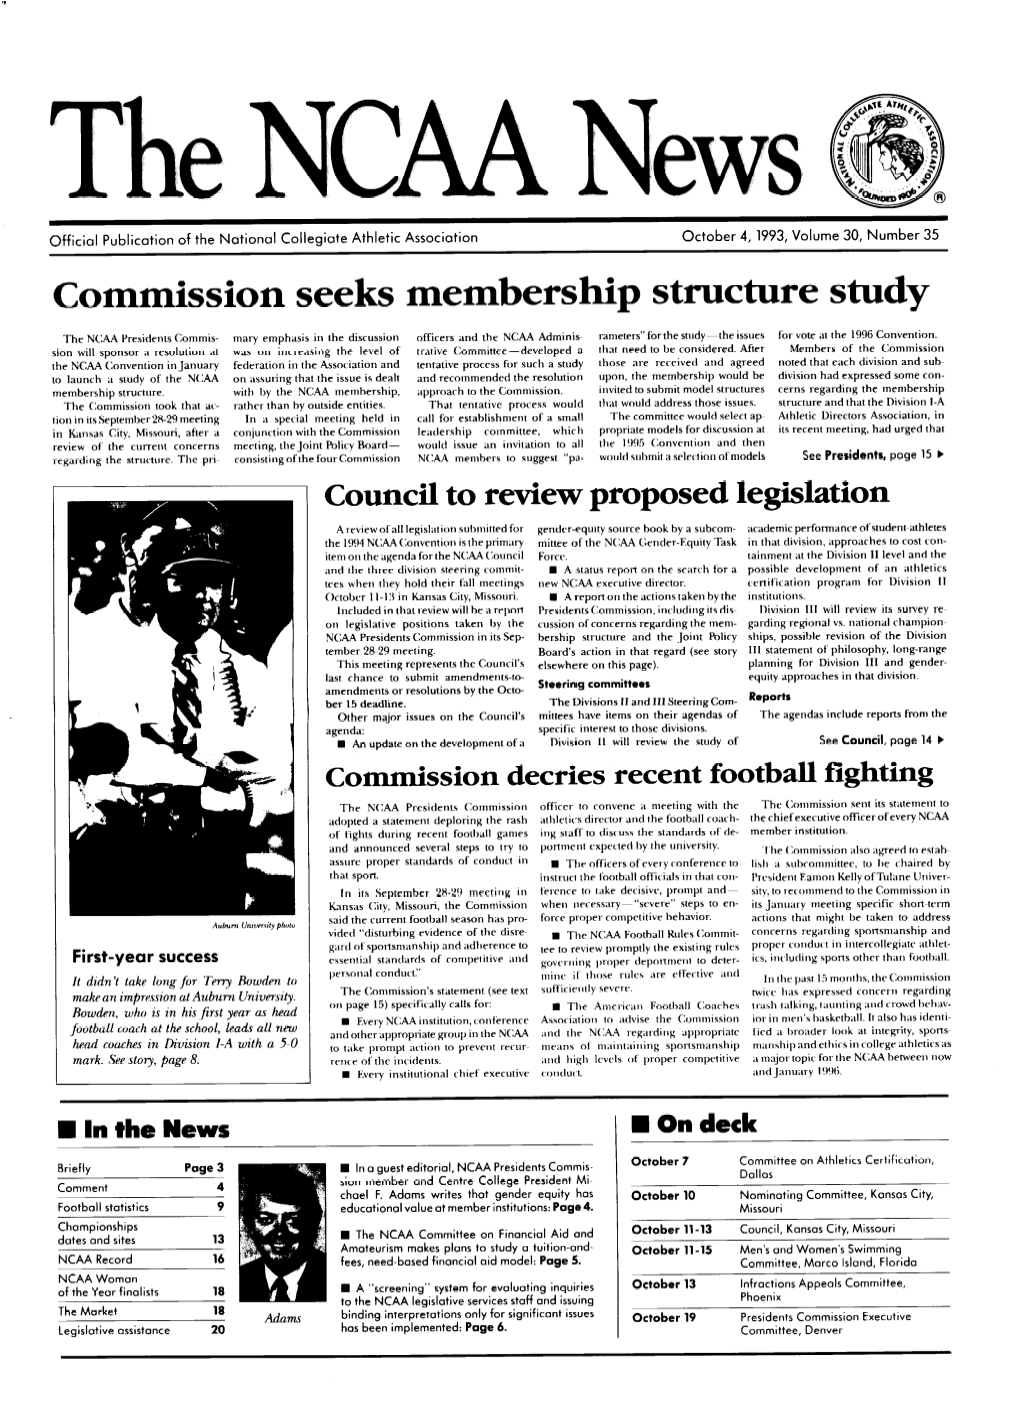 The NCAA News October 4, 1993